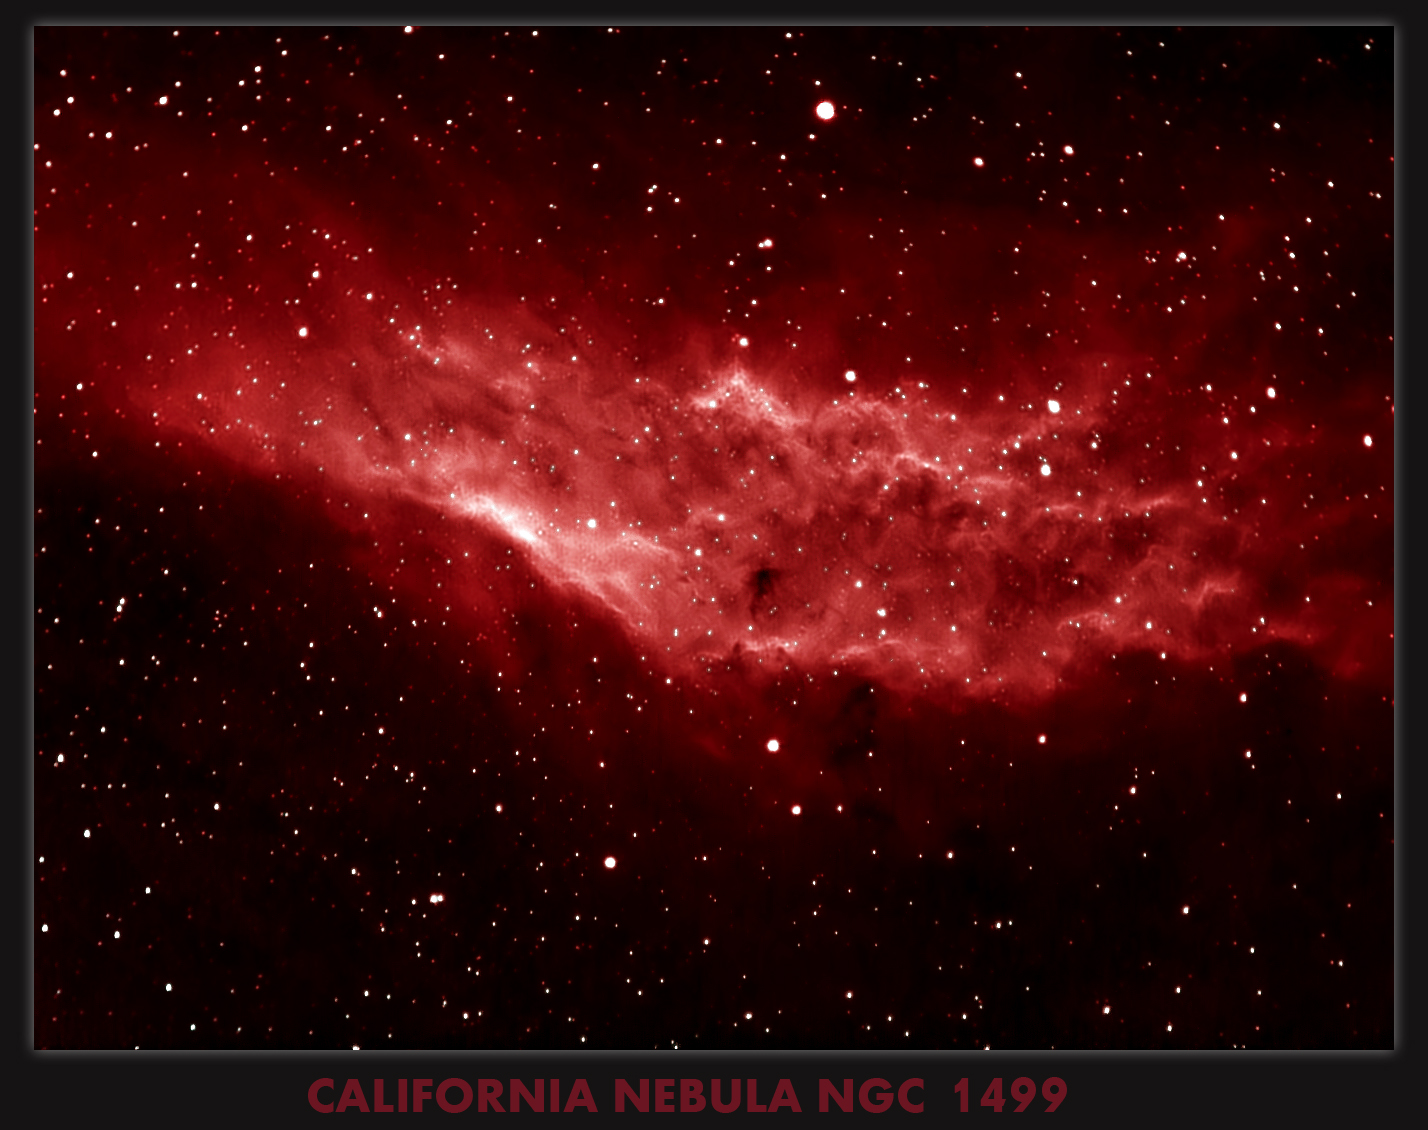 CALIFORNIA NEBULA NGC 1499